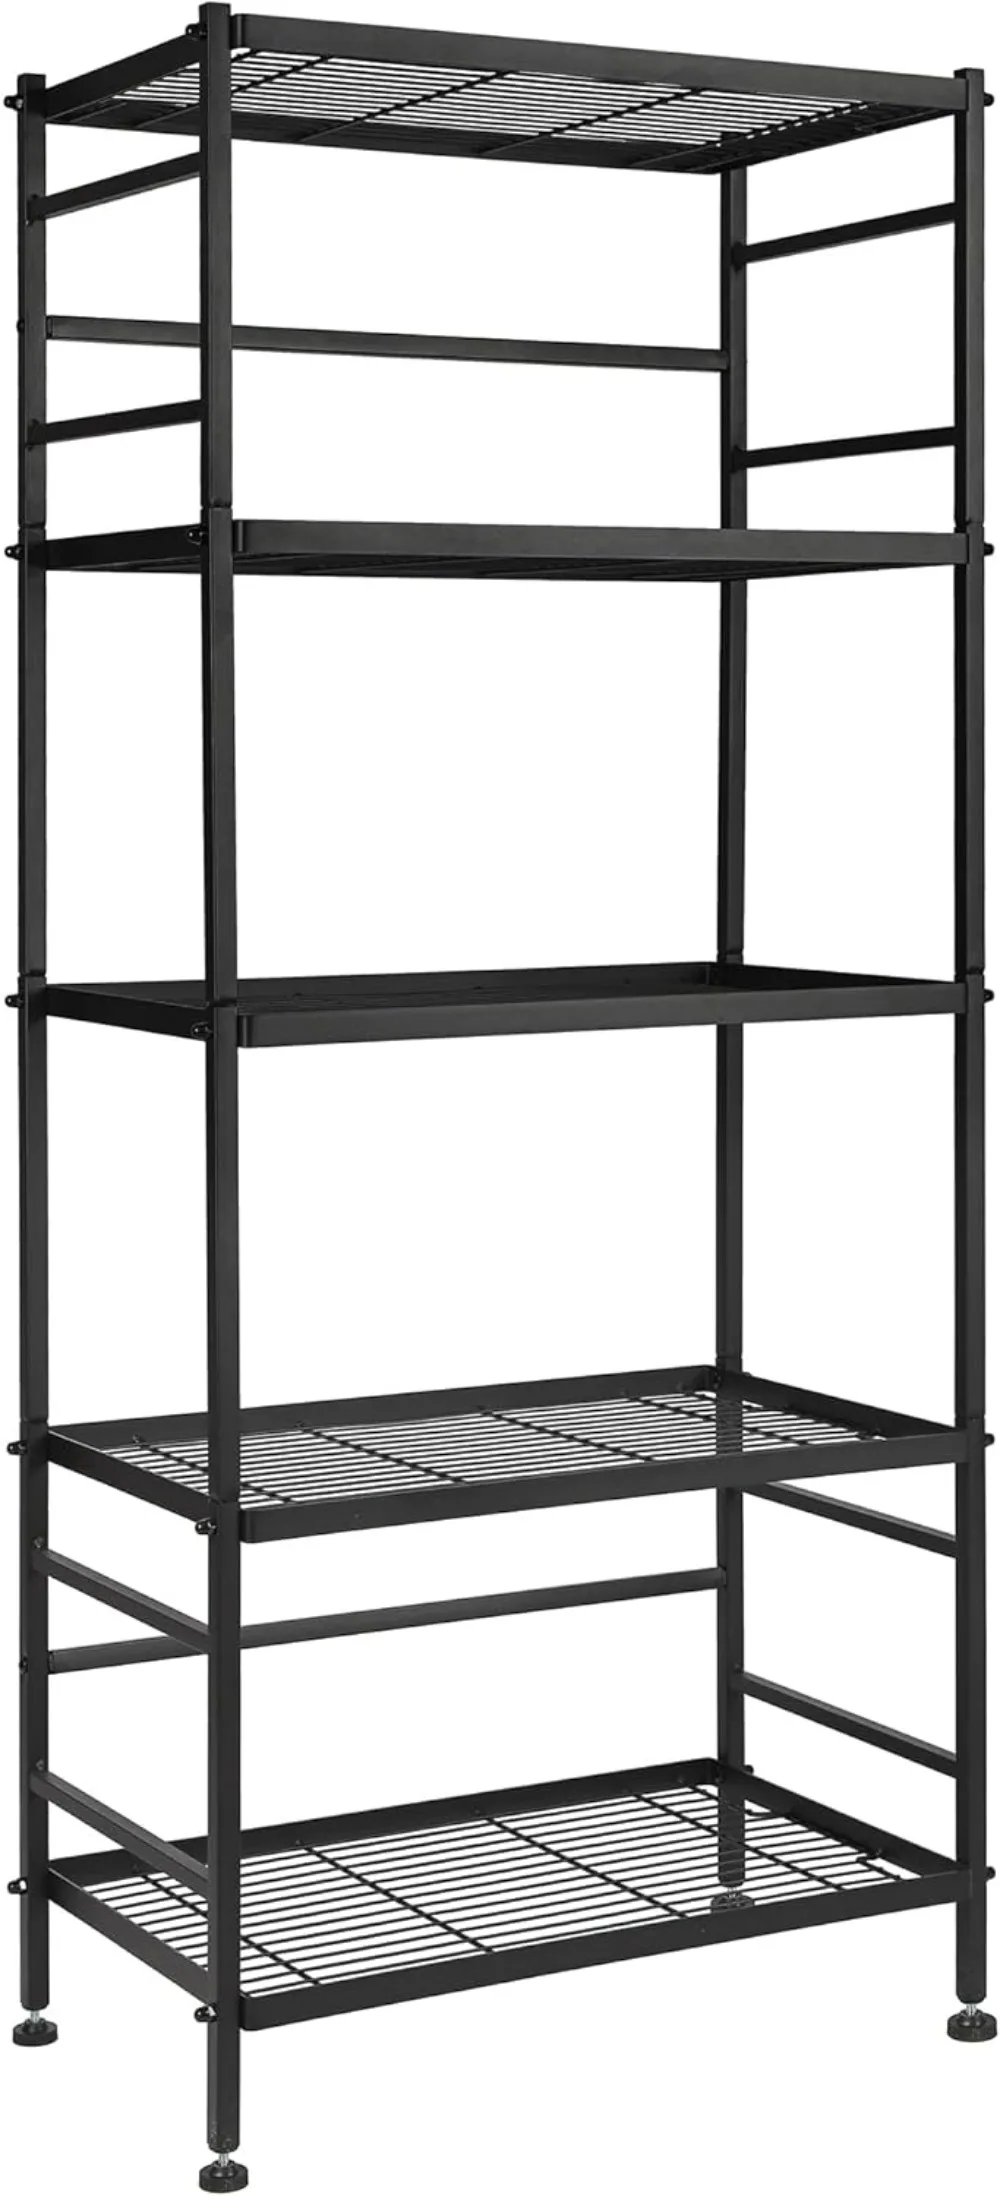 

5-Wire Shelving Metal Storage Rack Shelves, Standing Storage Shelf Units for Laundry Bathroom Kitchen Pantry Closet